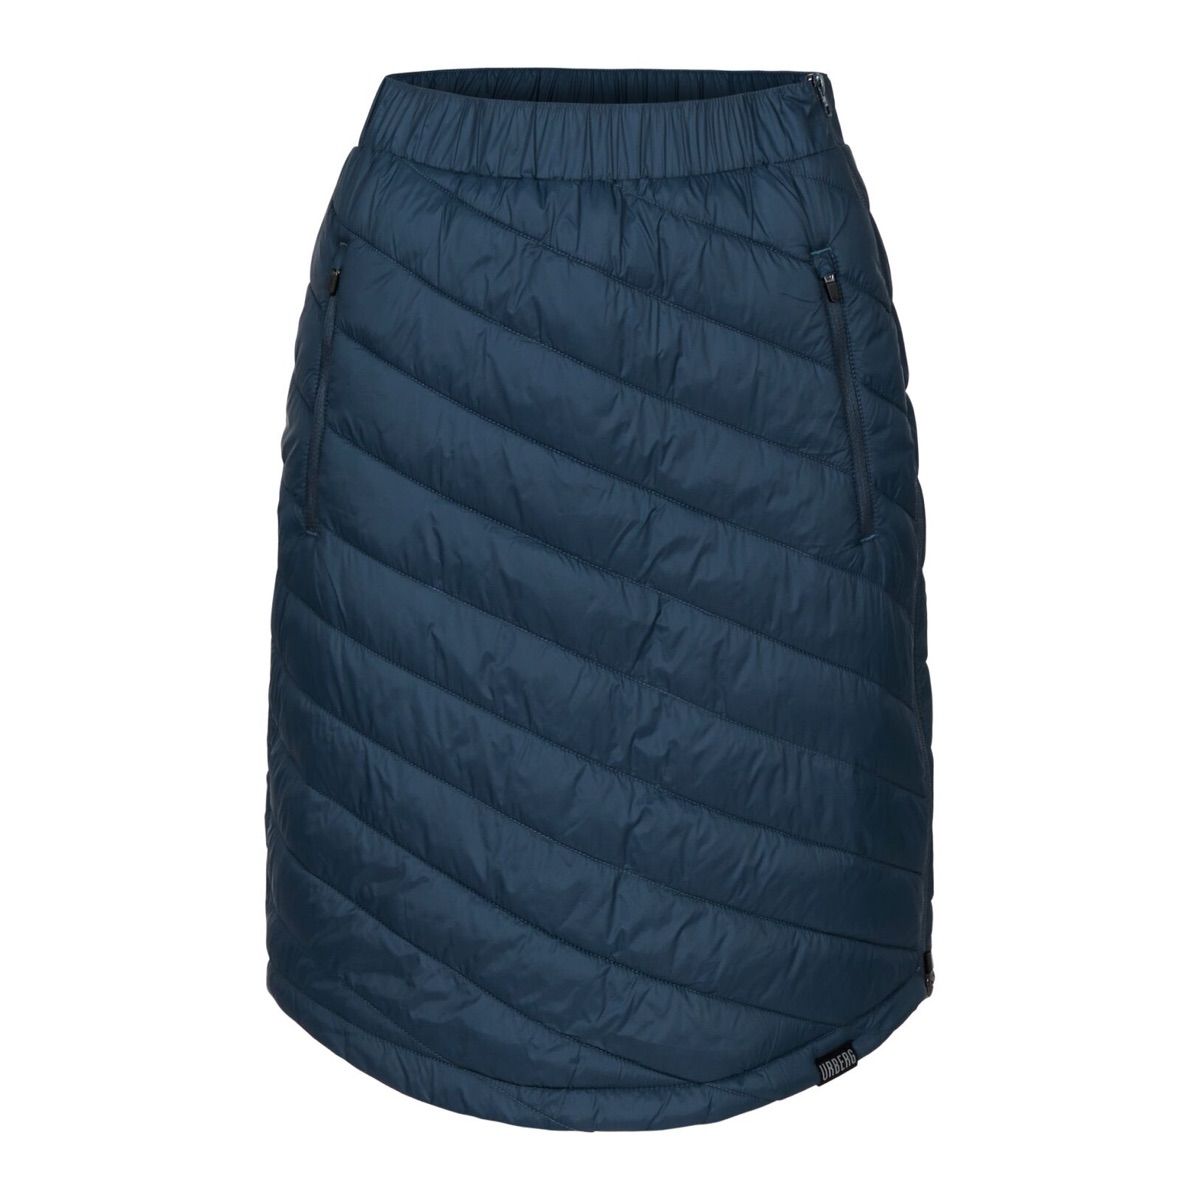 Urberg Women's Tallvik Padded Skirt Midnight Navy